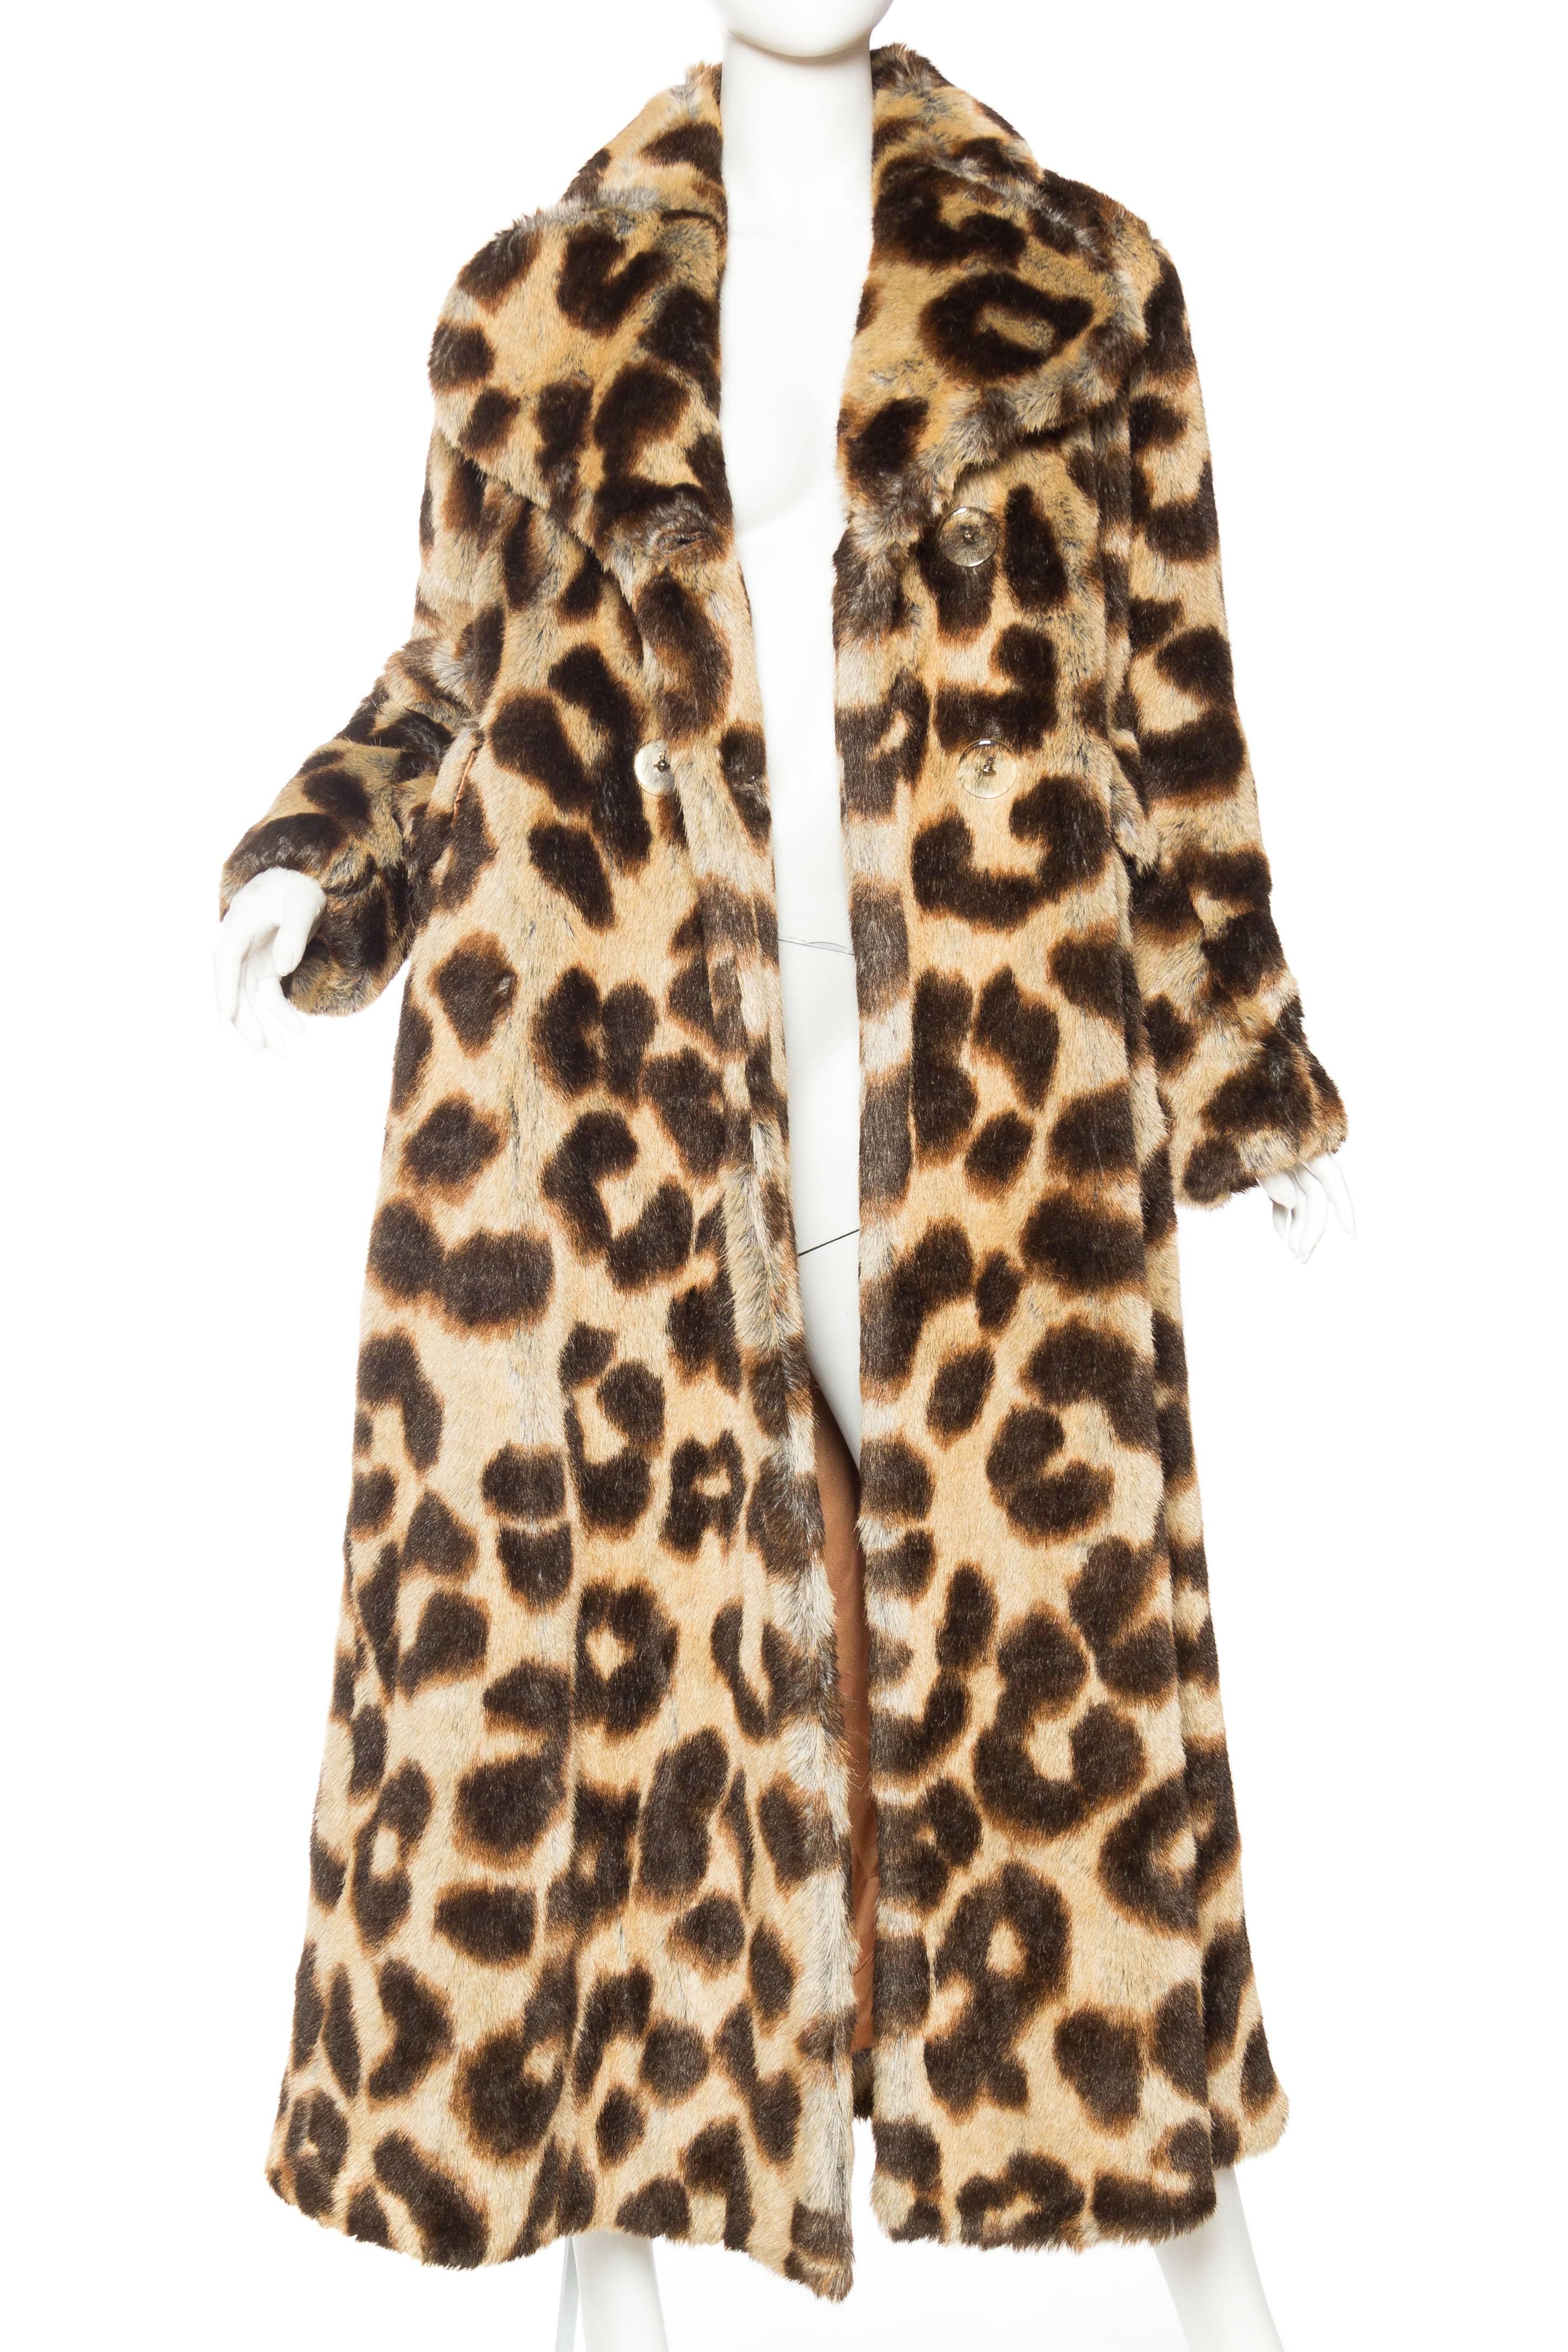 Vivienne Westwood Lush Faux Leopard Coat Tagged UK size 14 fits American size 4-6